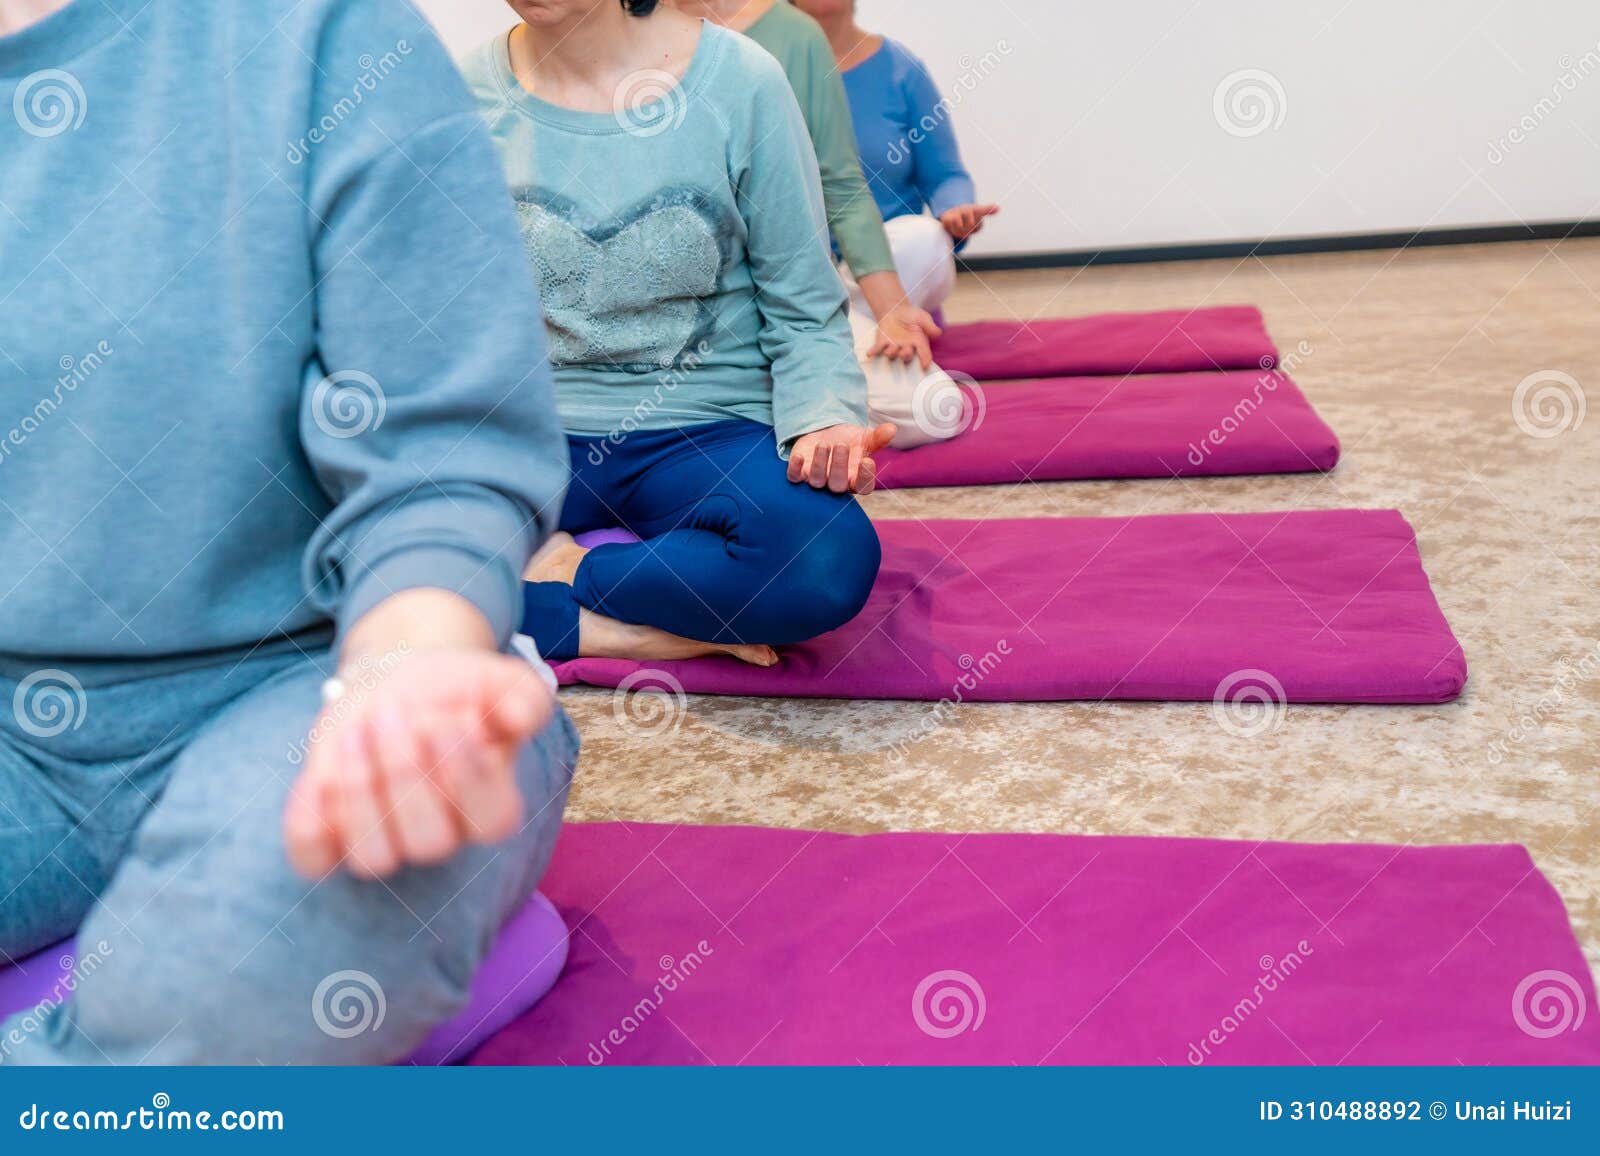 hands of women in lotus position of yoga